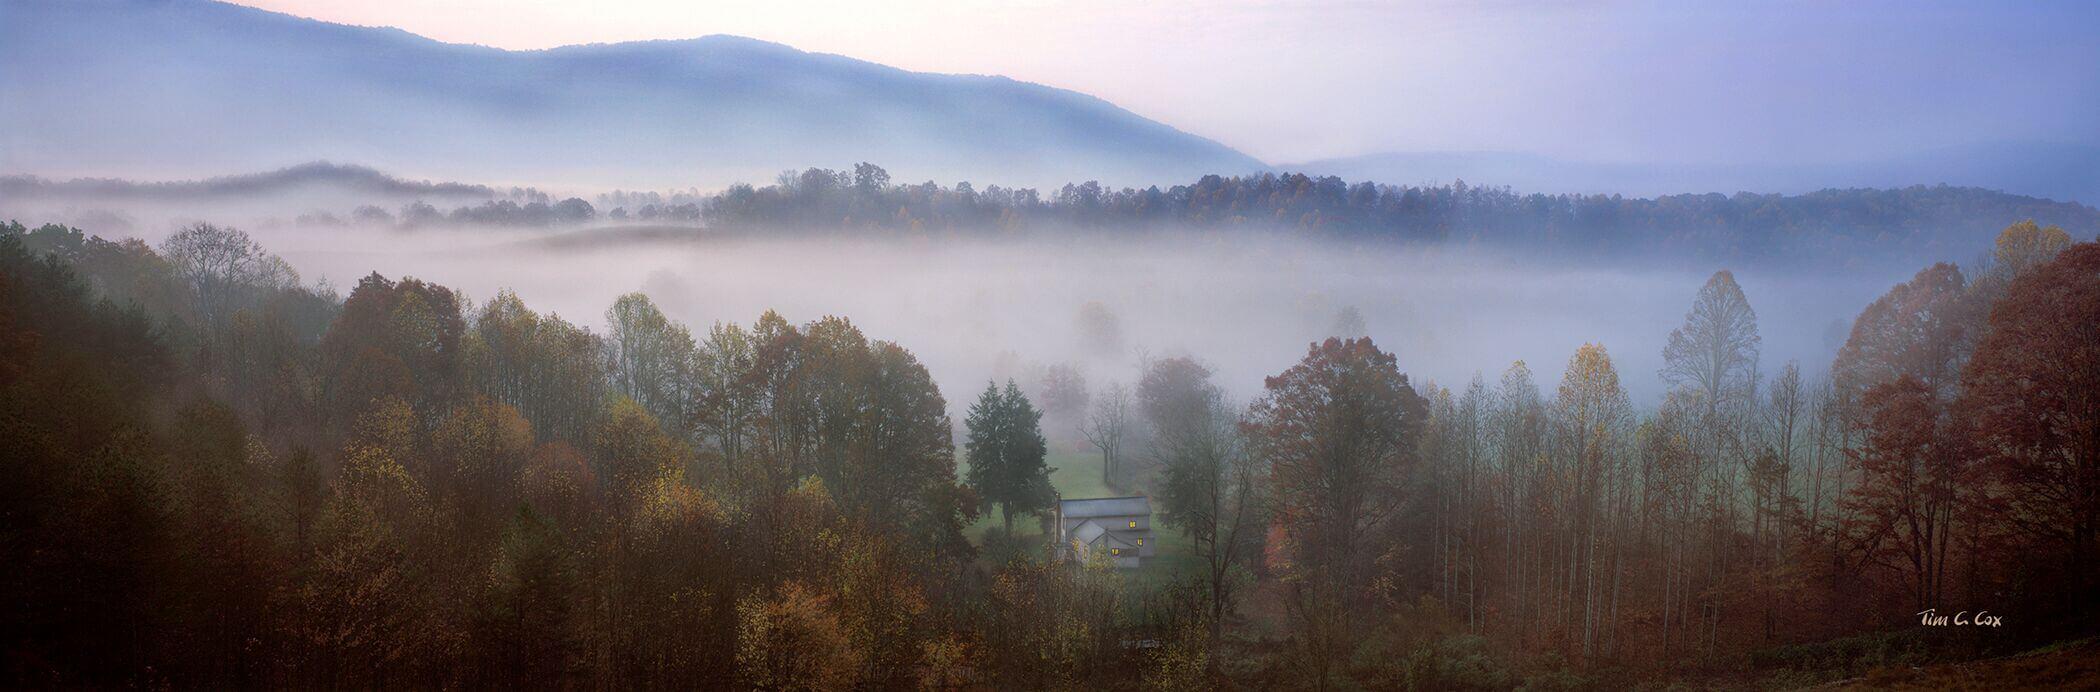 Photo of mist in a mountain range